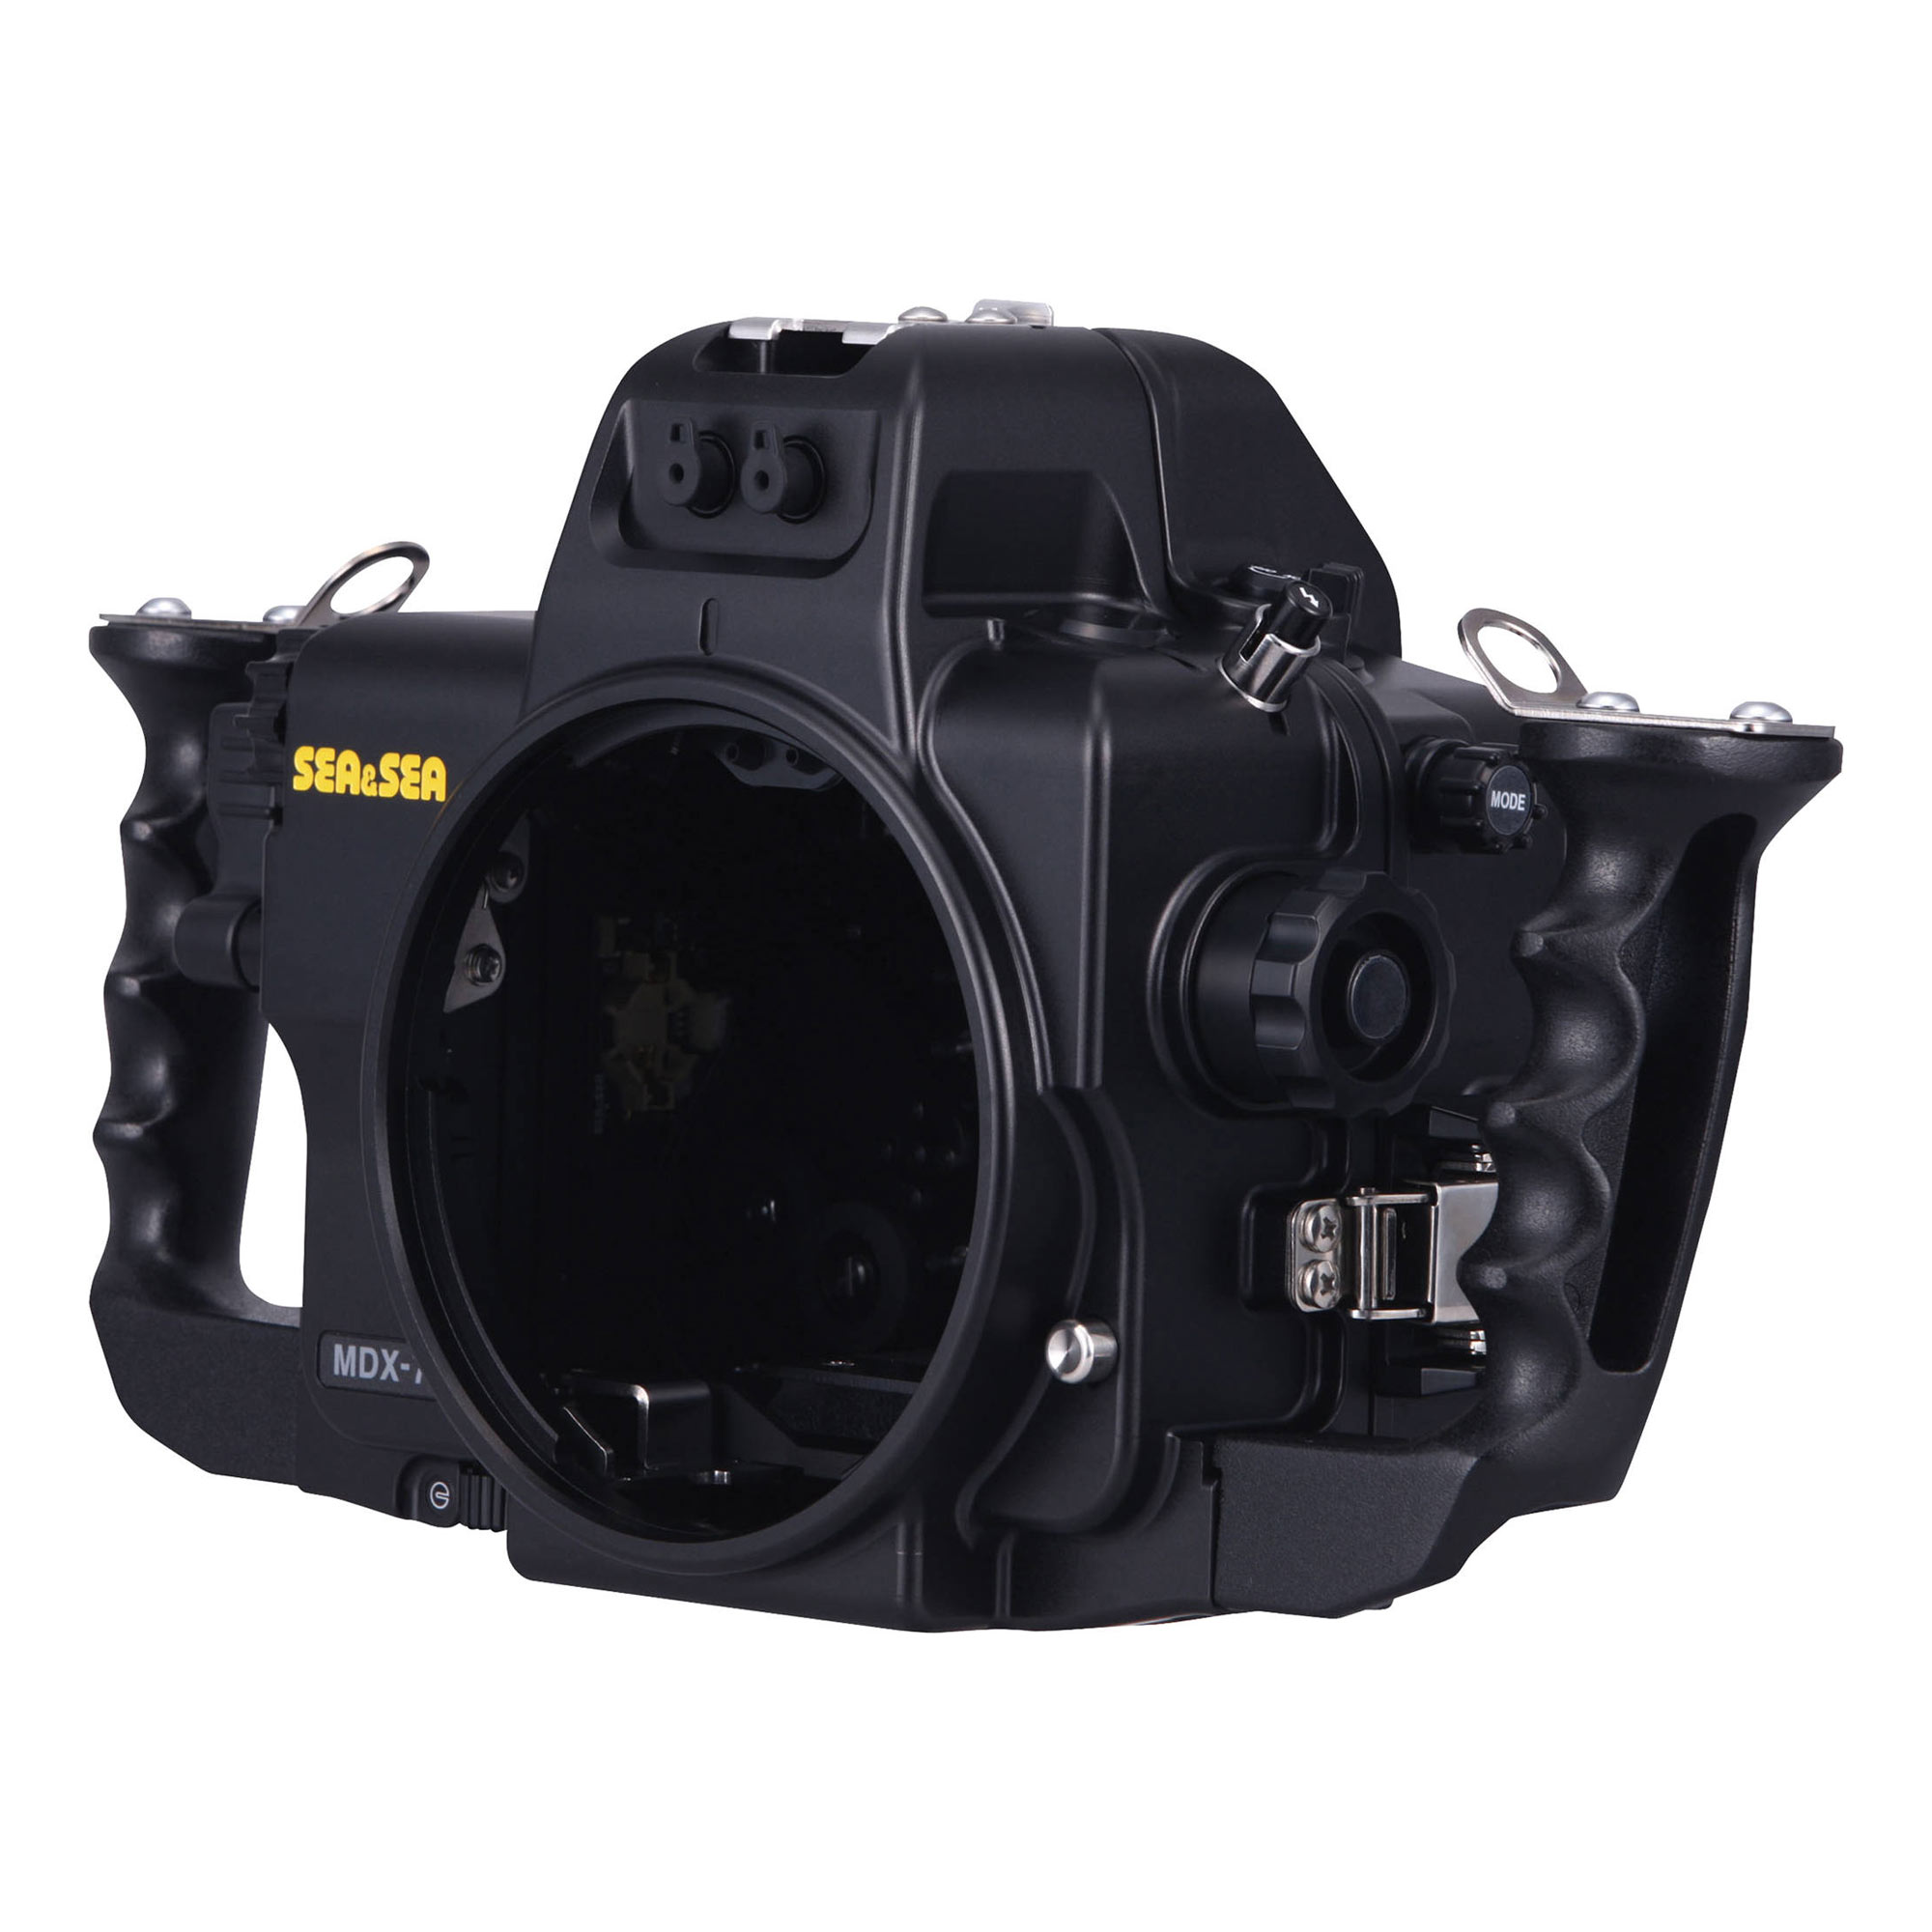 MDX-70D Underwater Housing for Canon EOS 70D DSLR Camera